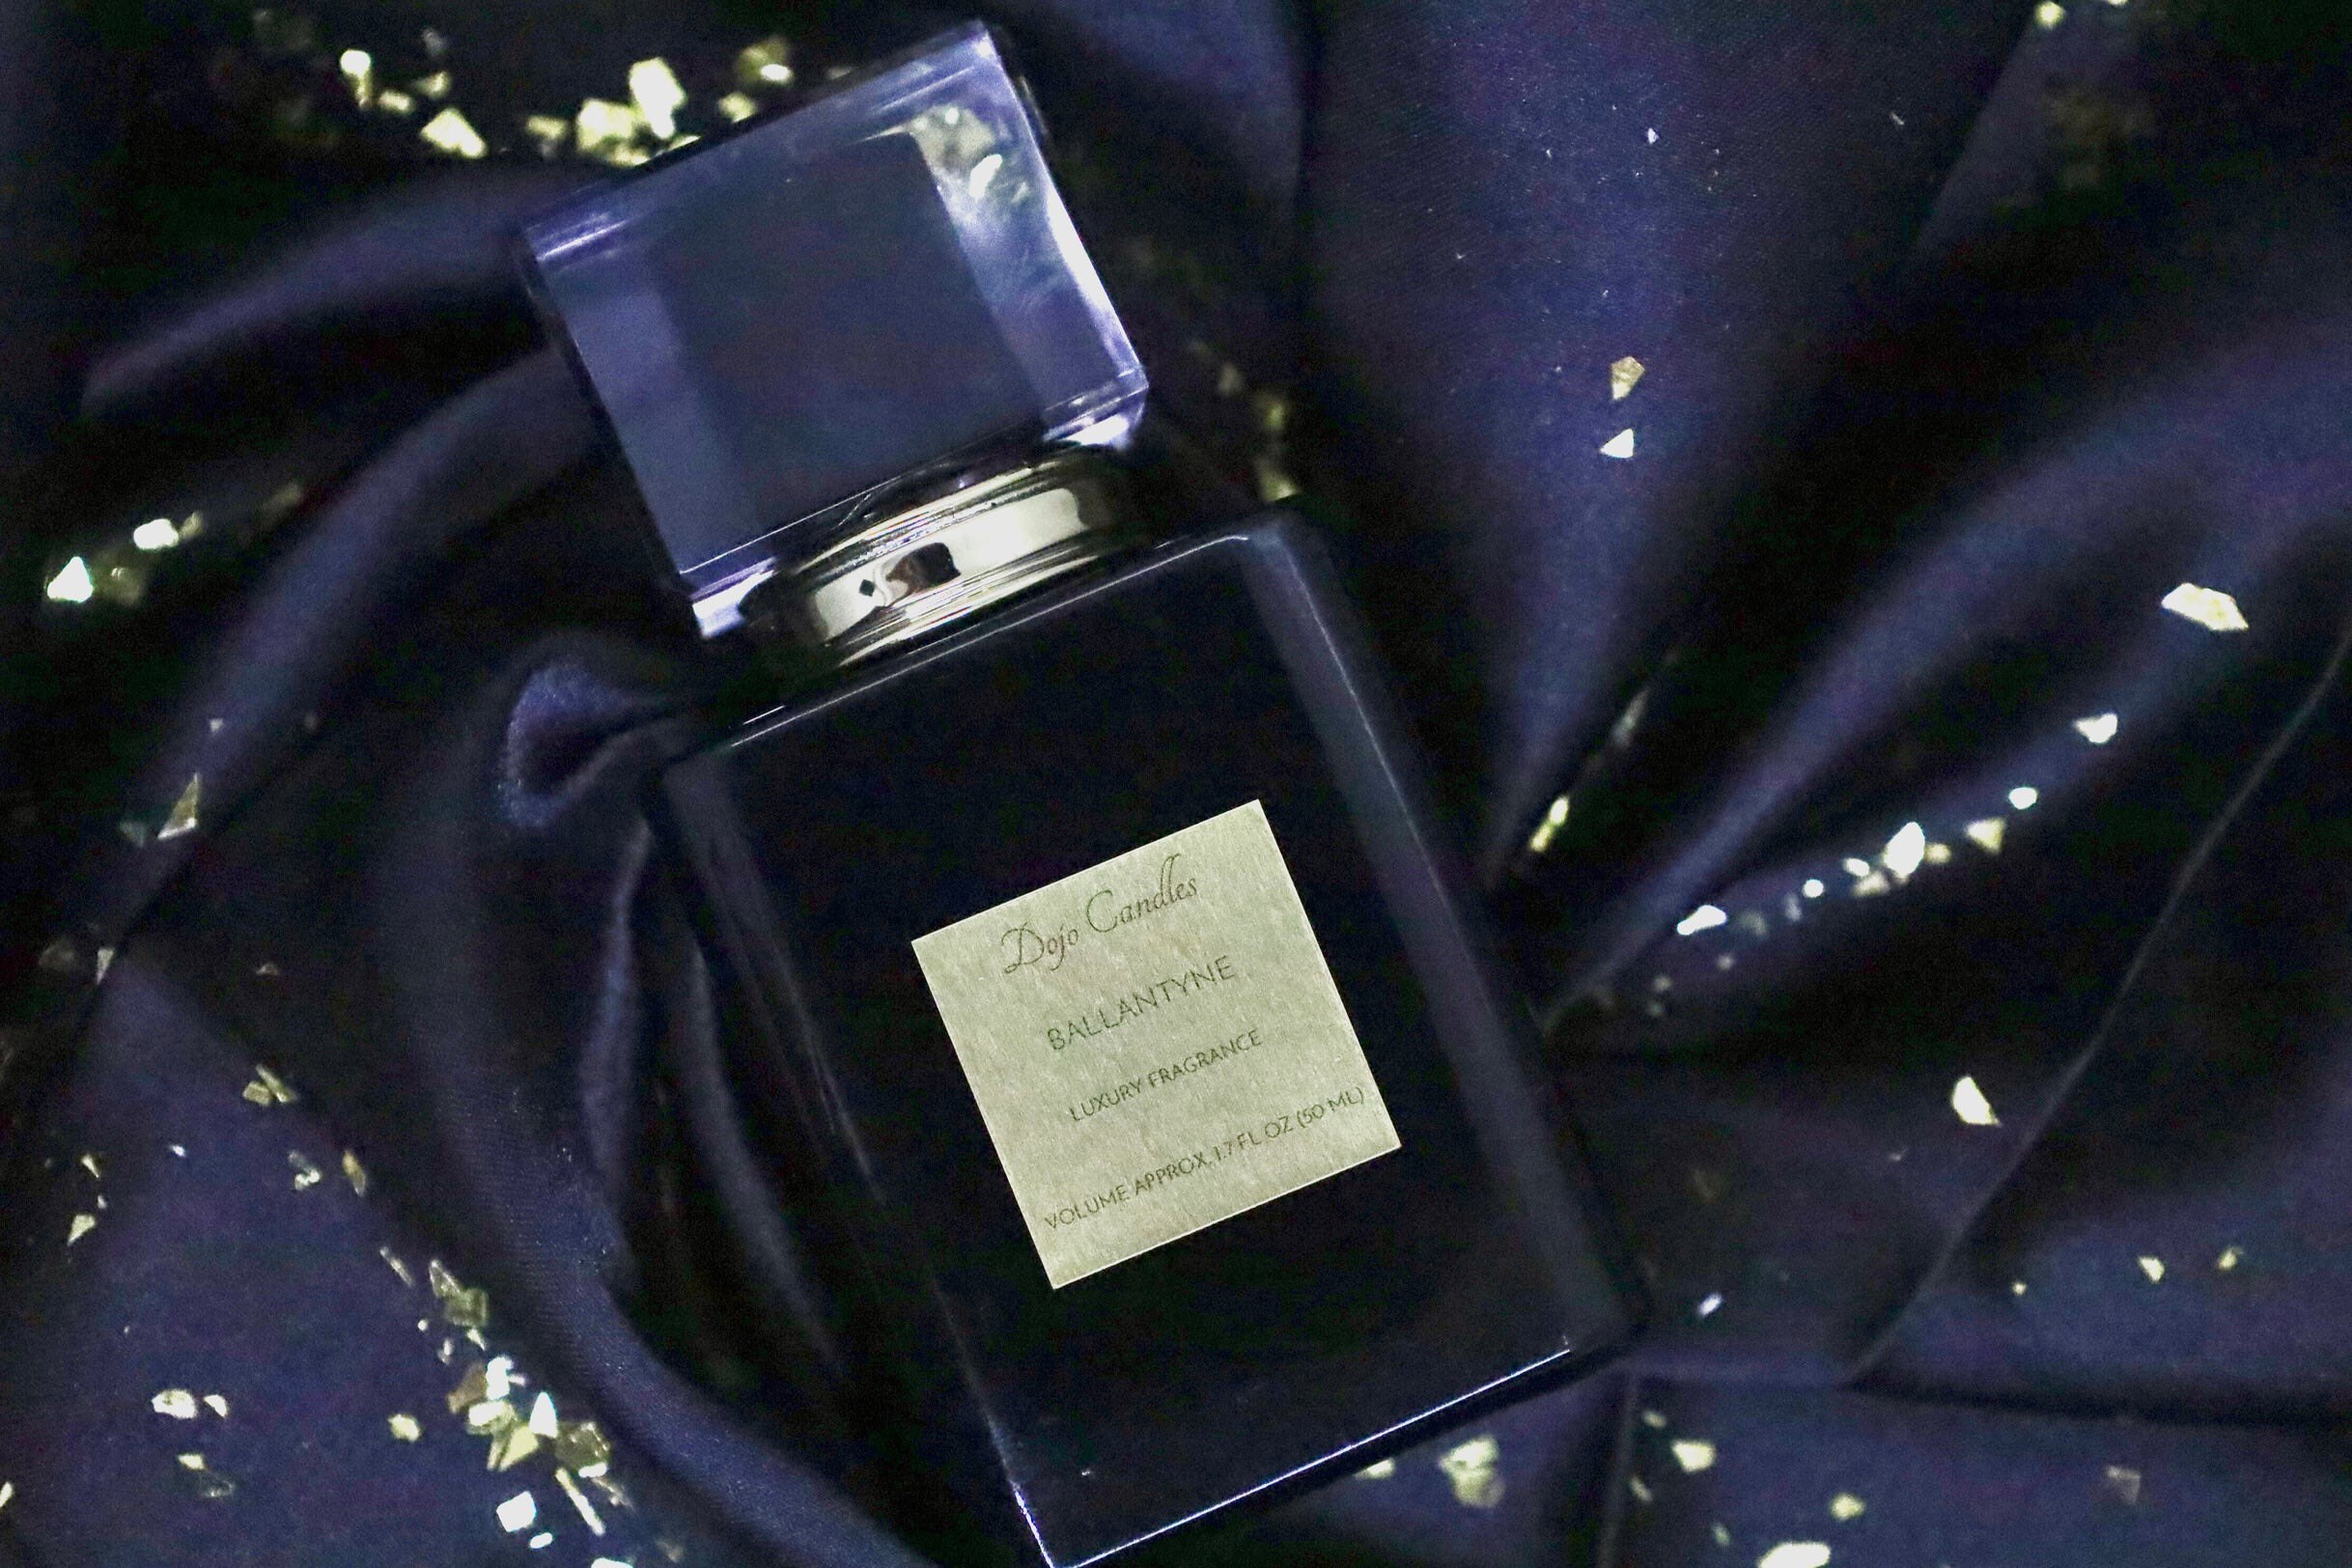 BLACK PHILLIP PERFUME Goth Perfume Oil Alternative Unique Fragrance Mahogany  Teakwood Gender Neutral Gothic Fragrance Spooky 